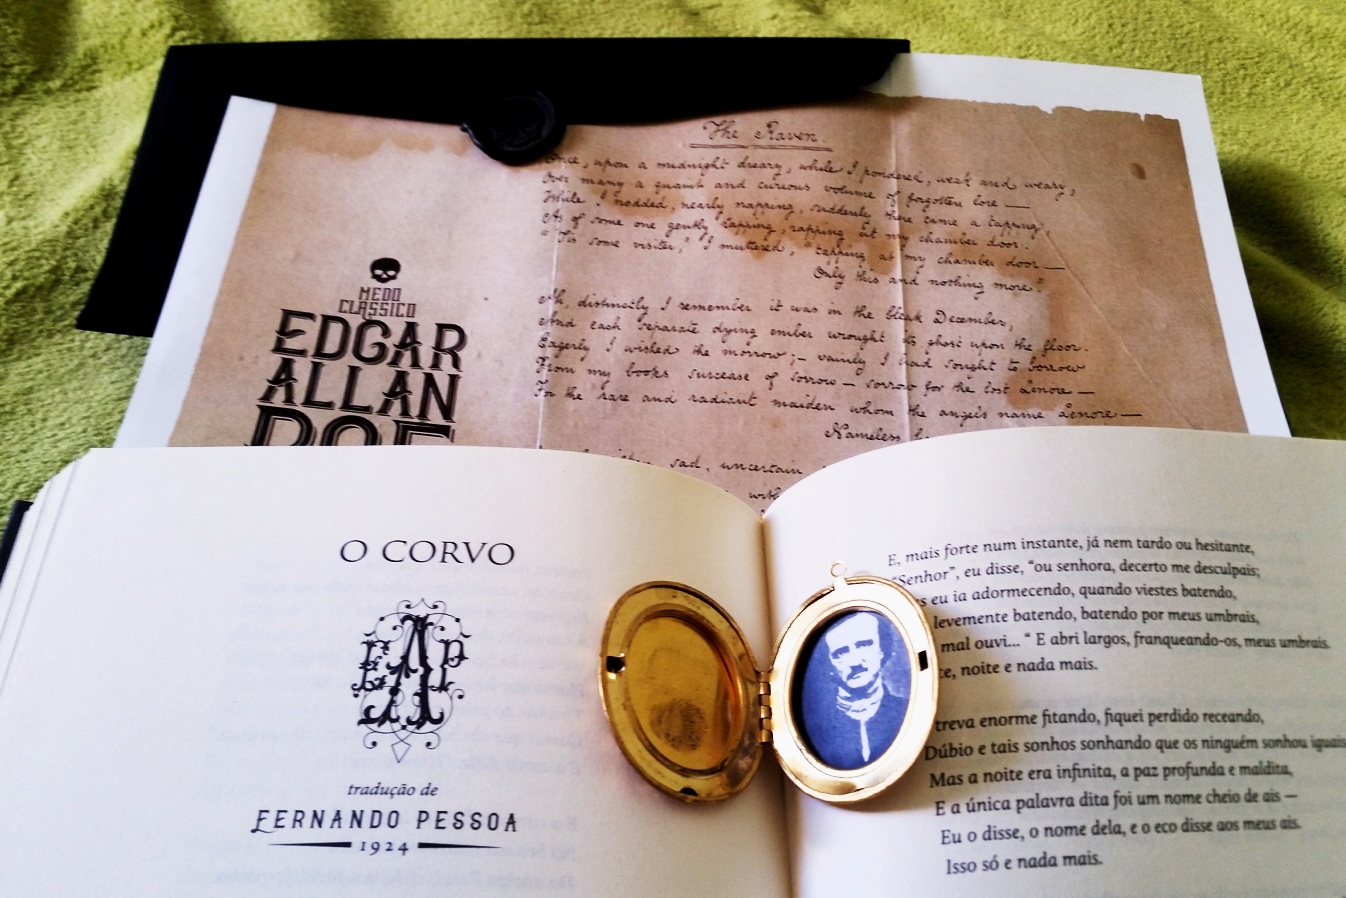 Edgar Allan Poe o corvo